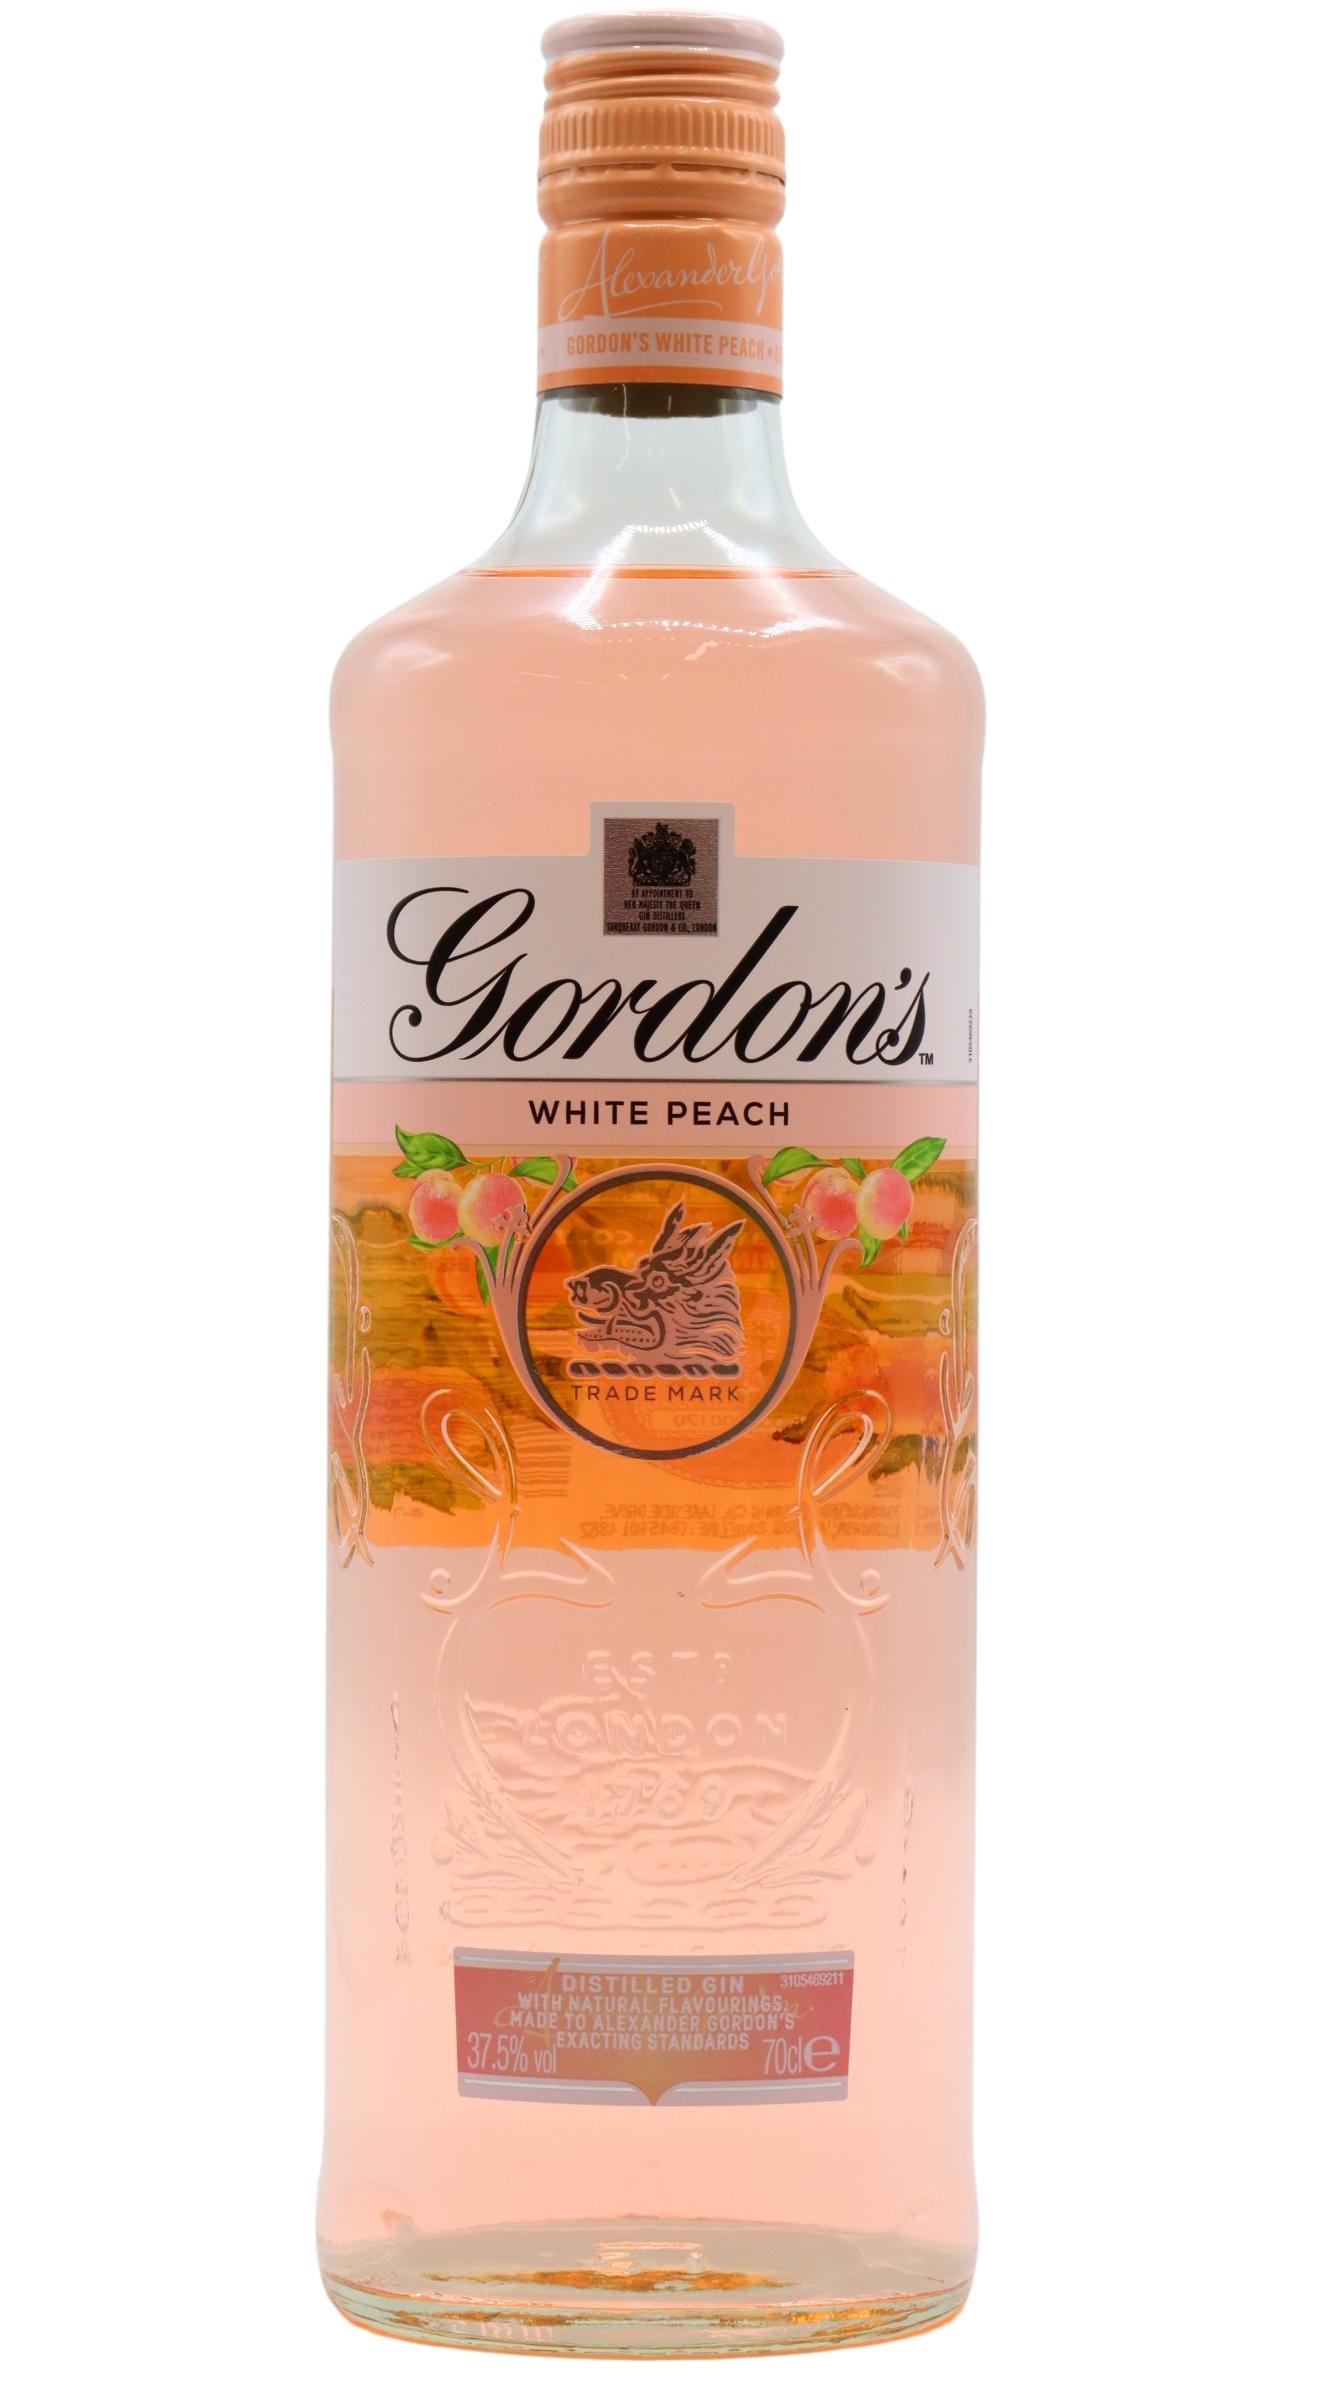 Gordon's Gin 70 cl, 37.5%